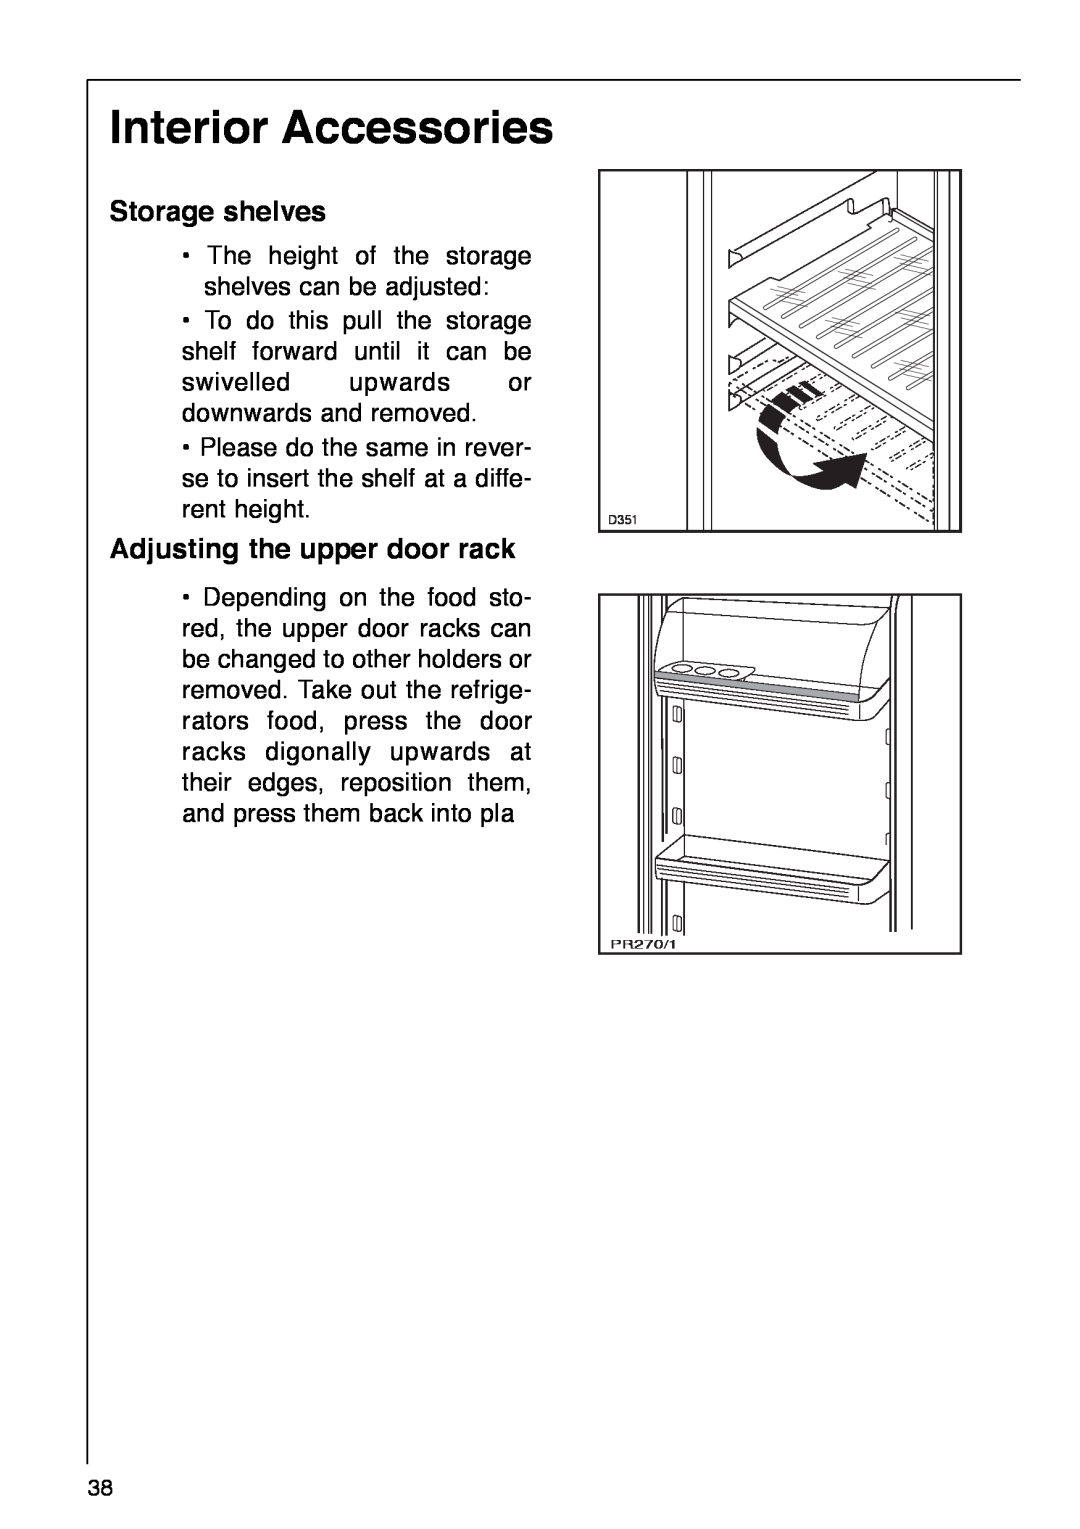 AEG 290-6I installation instructions Interior Accessories, Storage shelves, Adjusting the upper door rack 